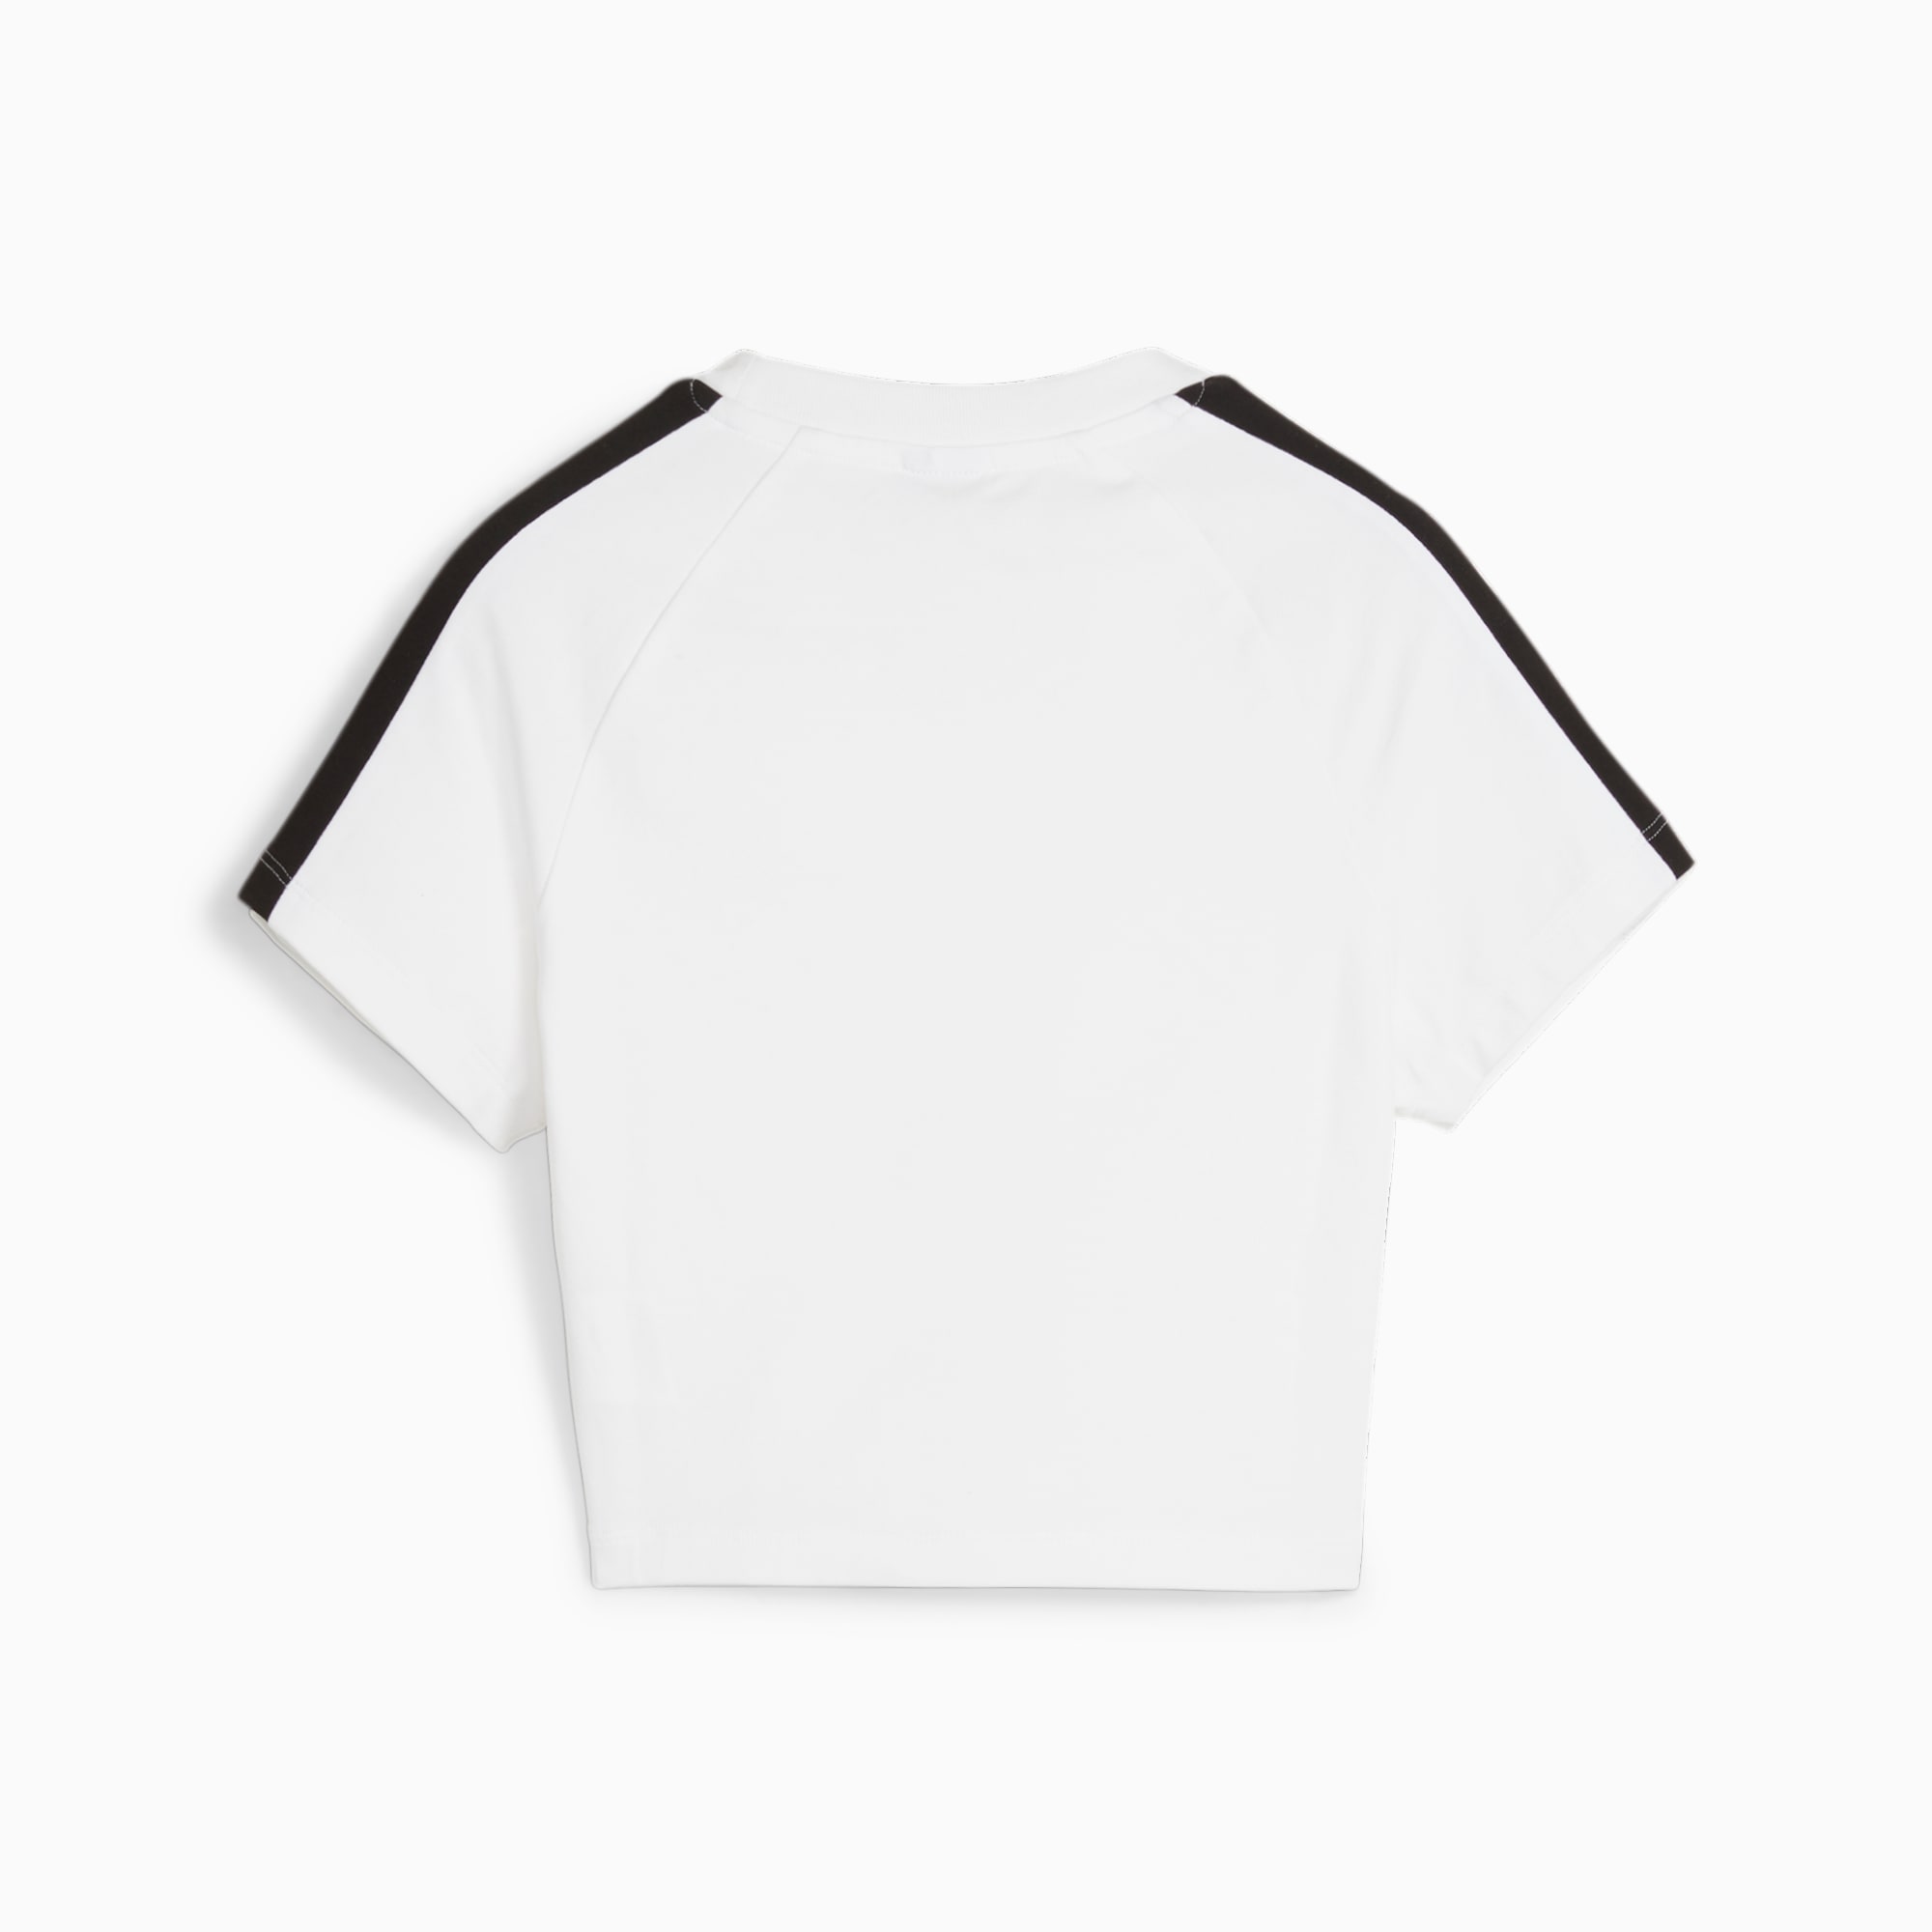 PUMA Iconic T7 Women's Baby T-Shirt, White, Size XS, Clothing